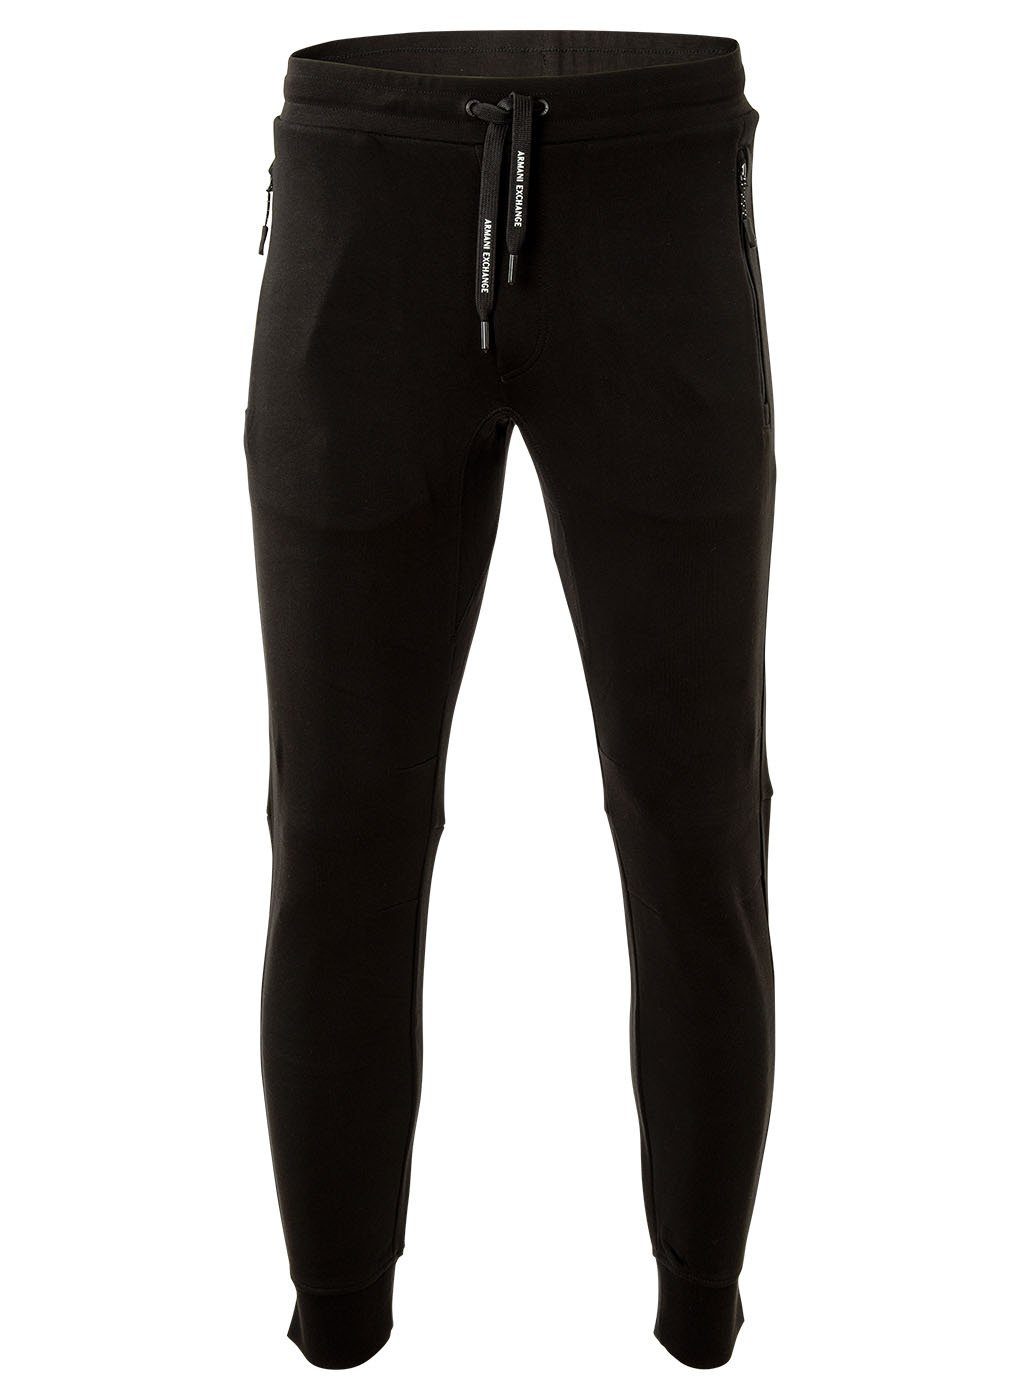 ARMANI EXCHANGE Jogginghose Herren Jogginghose - Loungewear Pants, lang,  Elastischer Bund mit Zugband